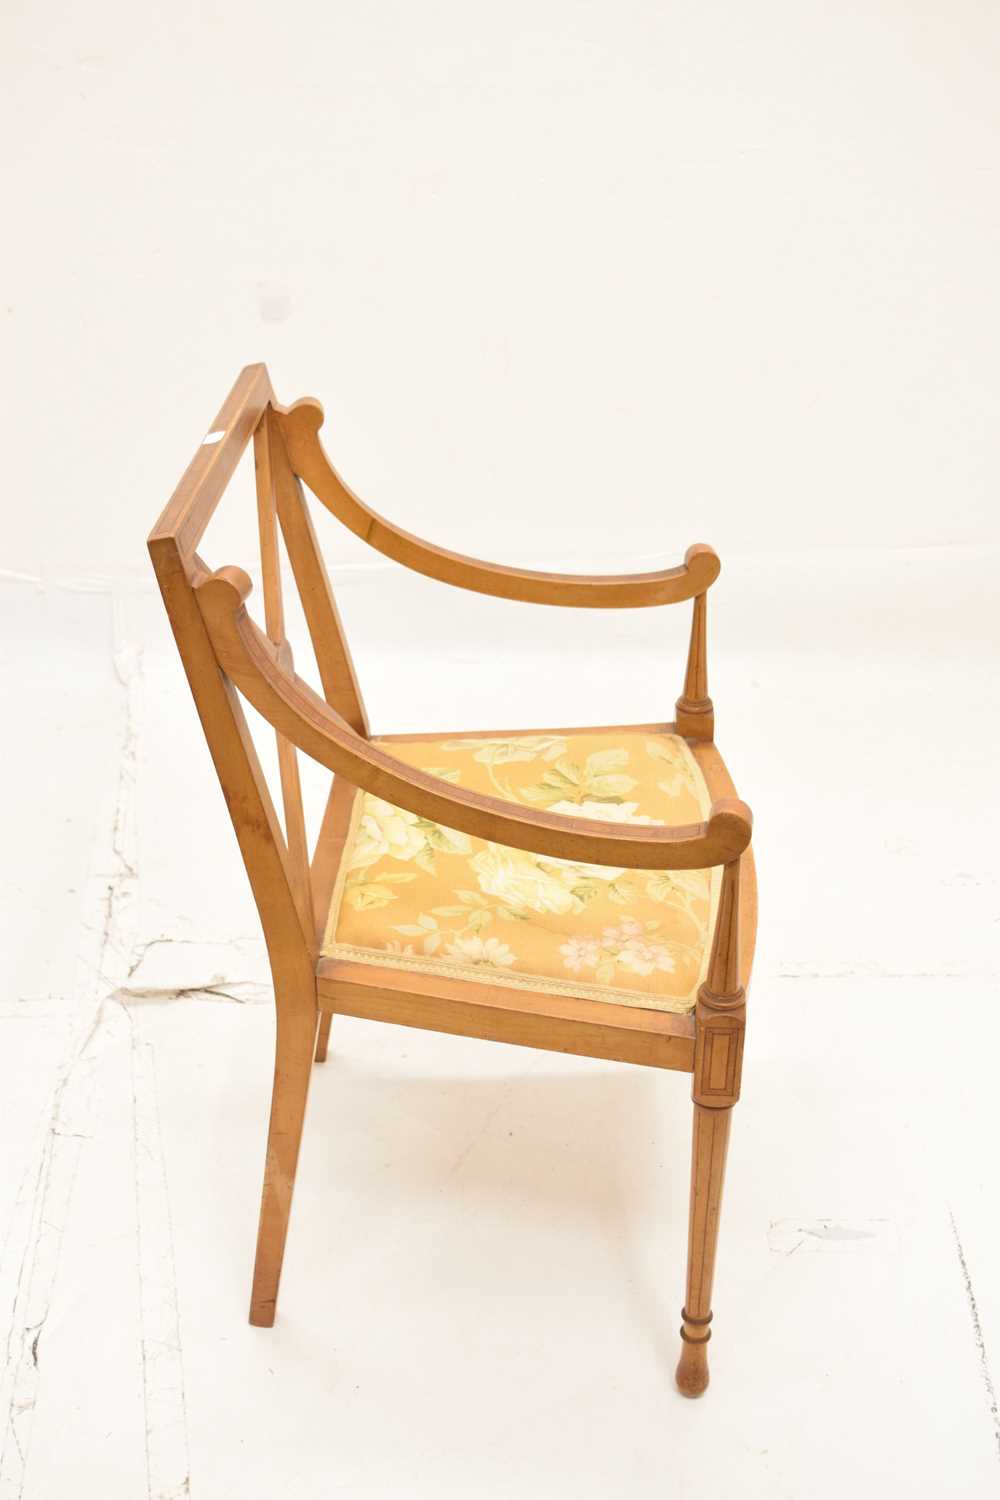 Edwardian crossbanded satinwood Sheraton-style elbow chair - Image 5 of 8